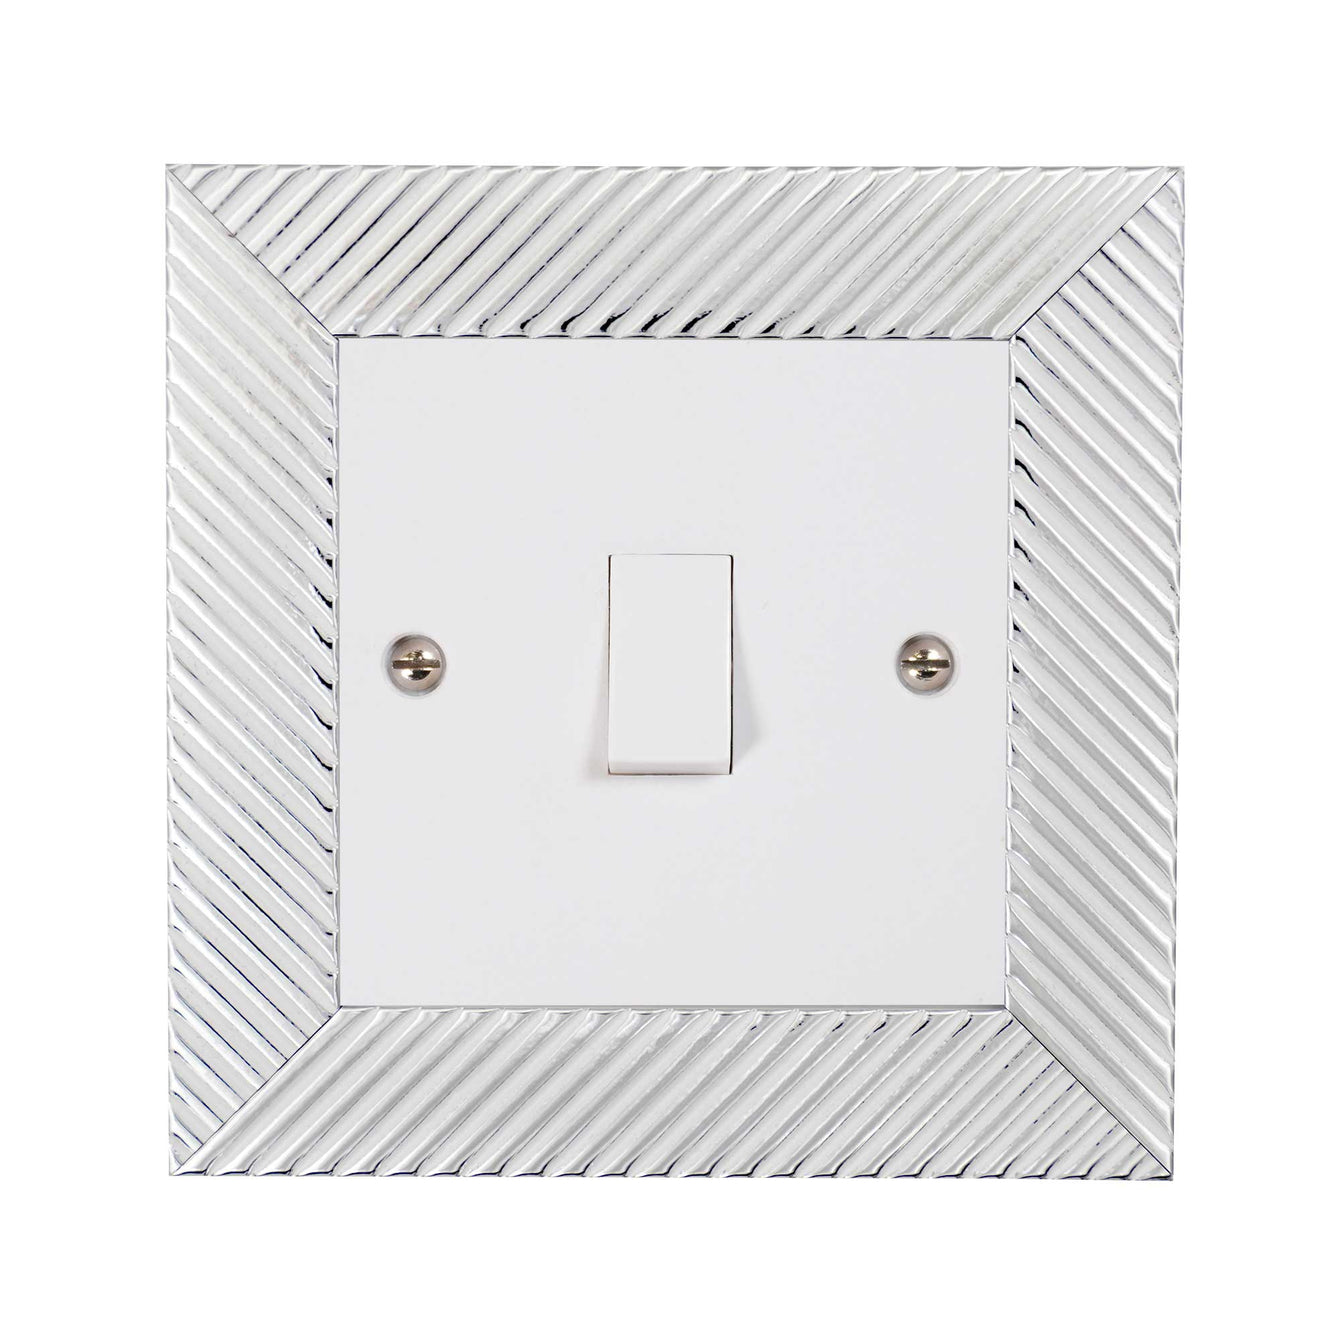 ElekTek Decorative Switch Surround Frame Cover Finger Plate Patterns Gunmetal Dots Dashes